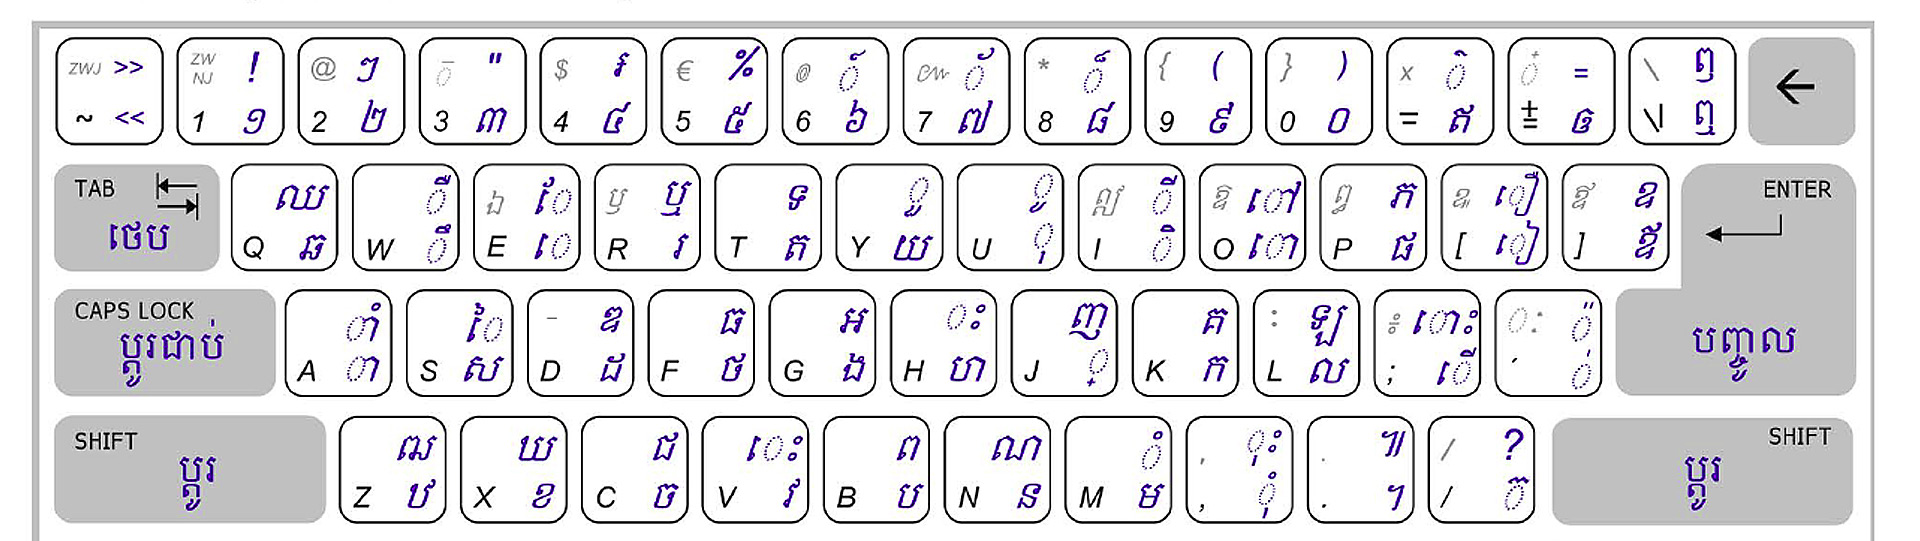 Khmer Unicode Font For Mac Download